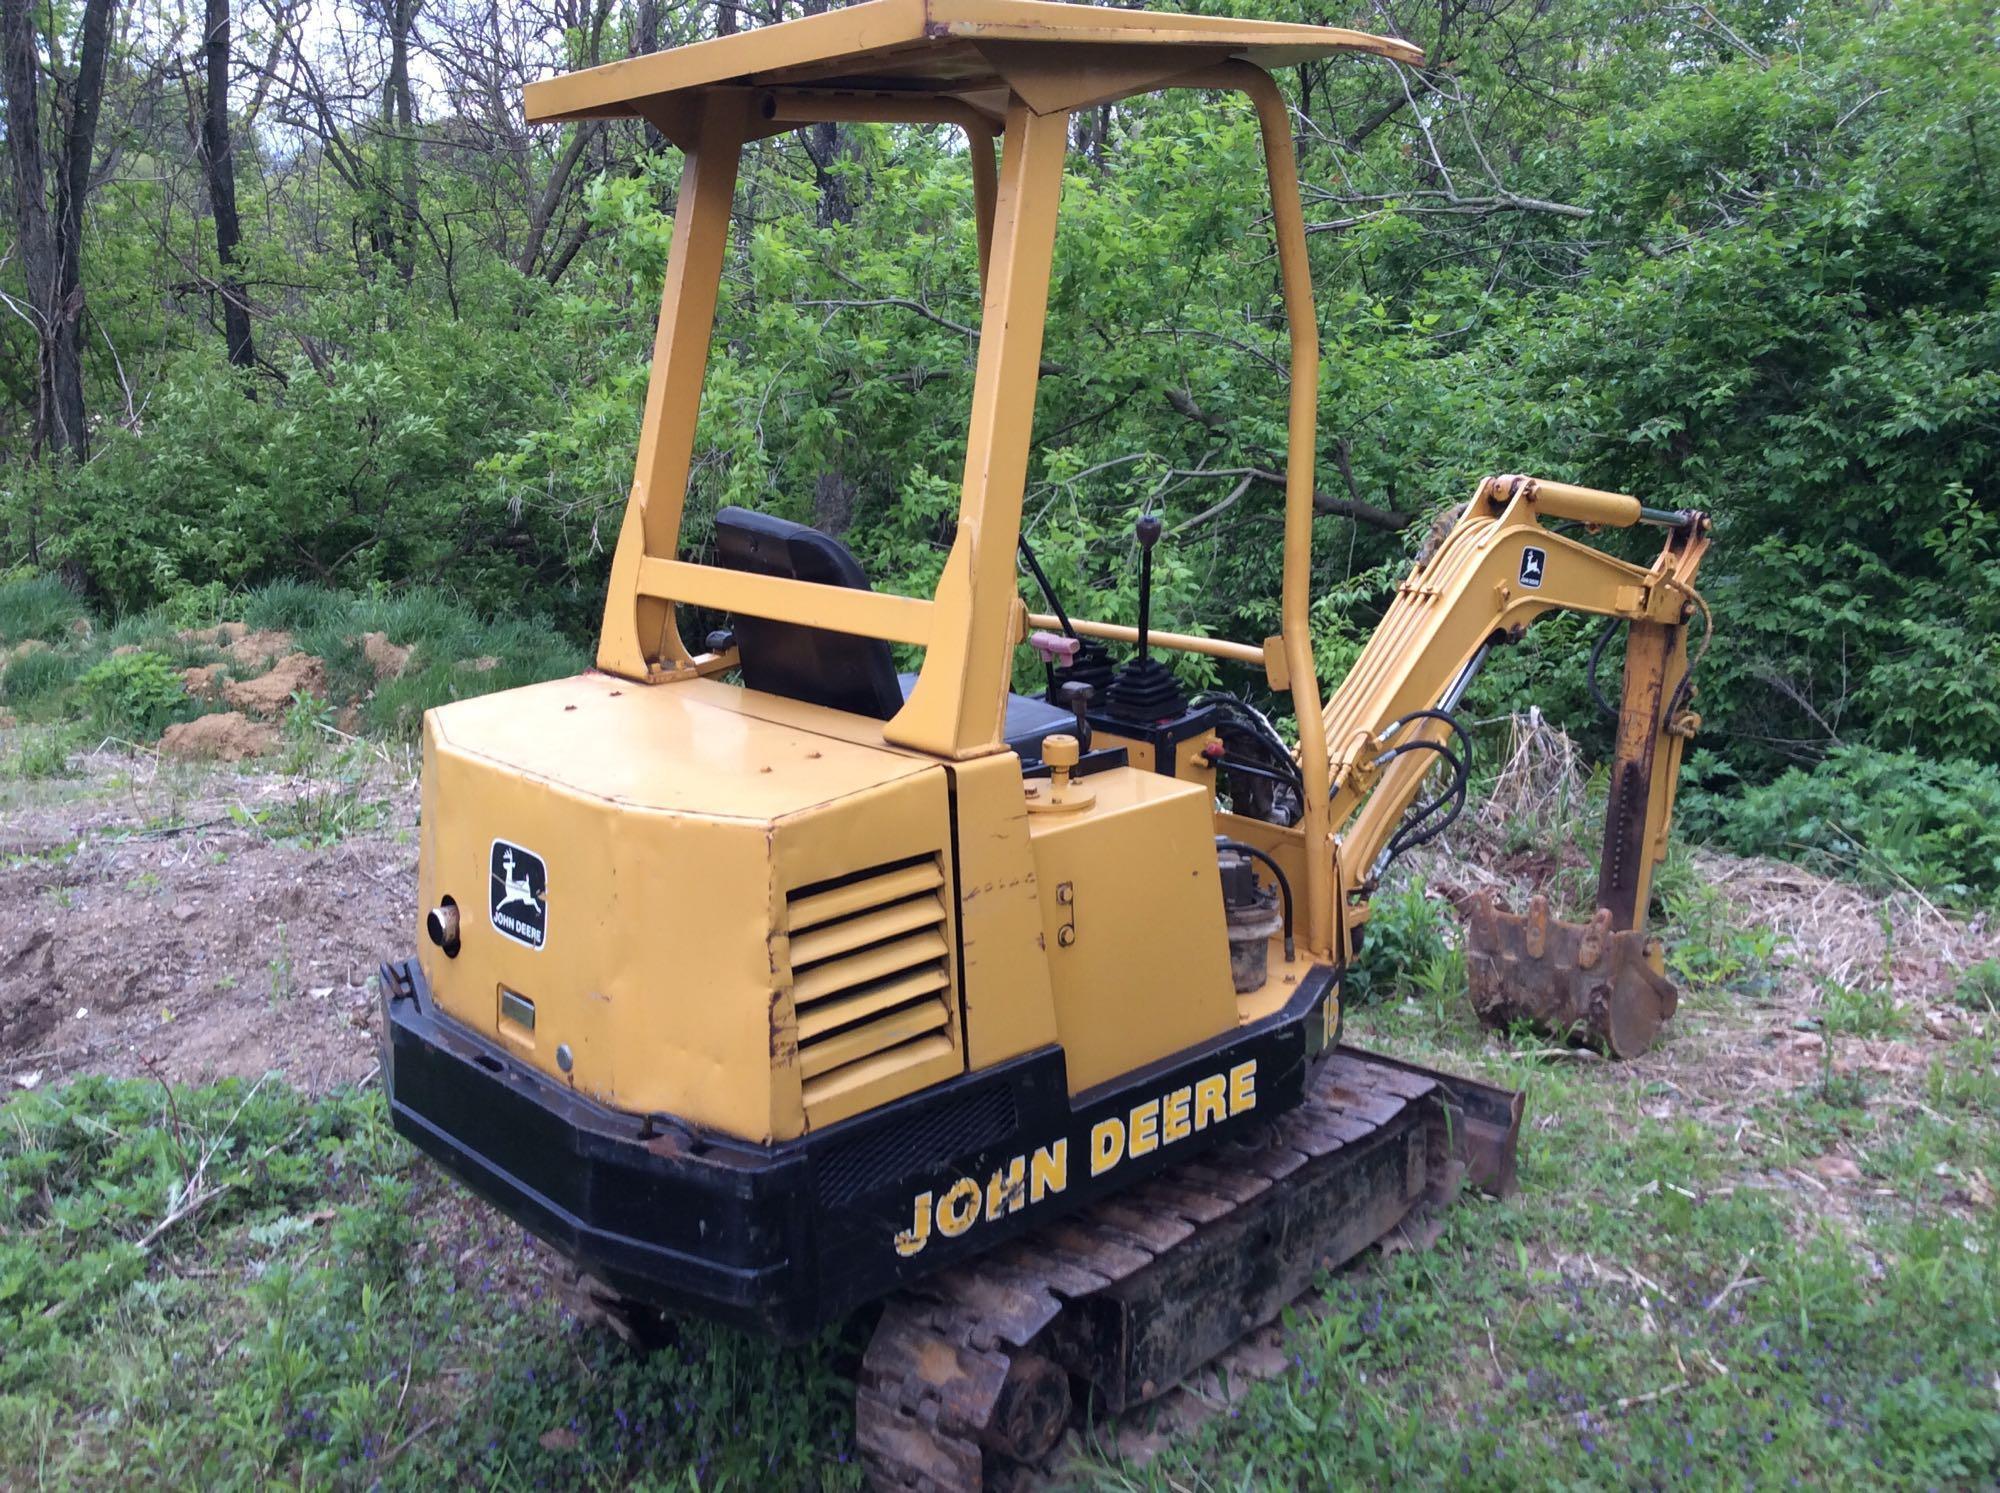 John Deere 15 mini excavator with steel tracks and 15 in bucket